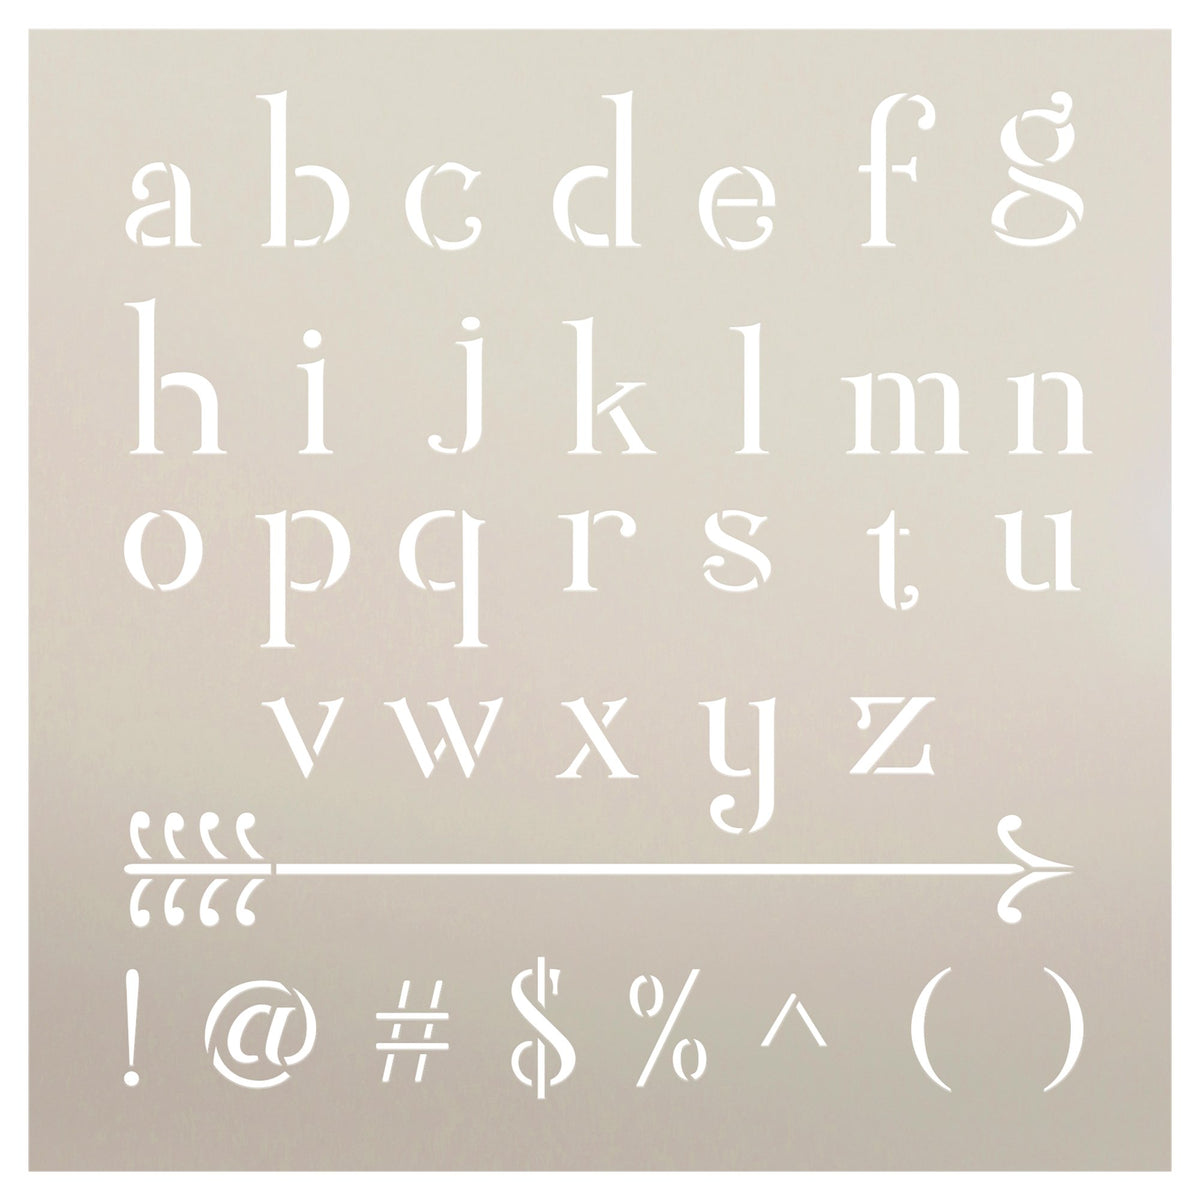 Retro Script Alphabet Stencils by StudioR12